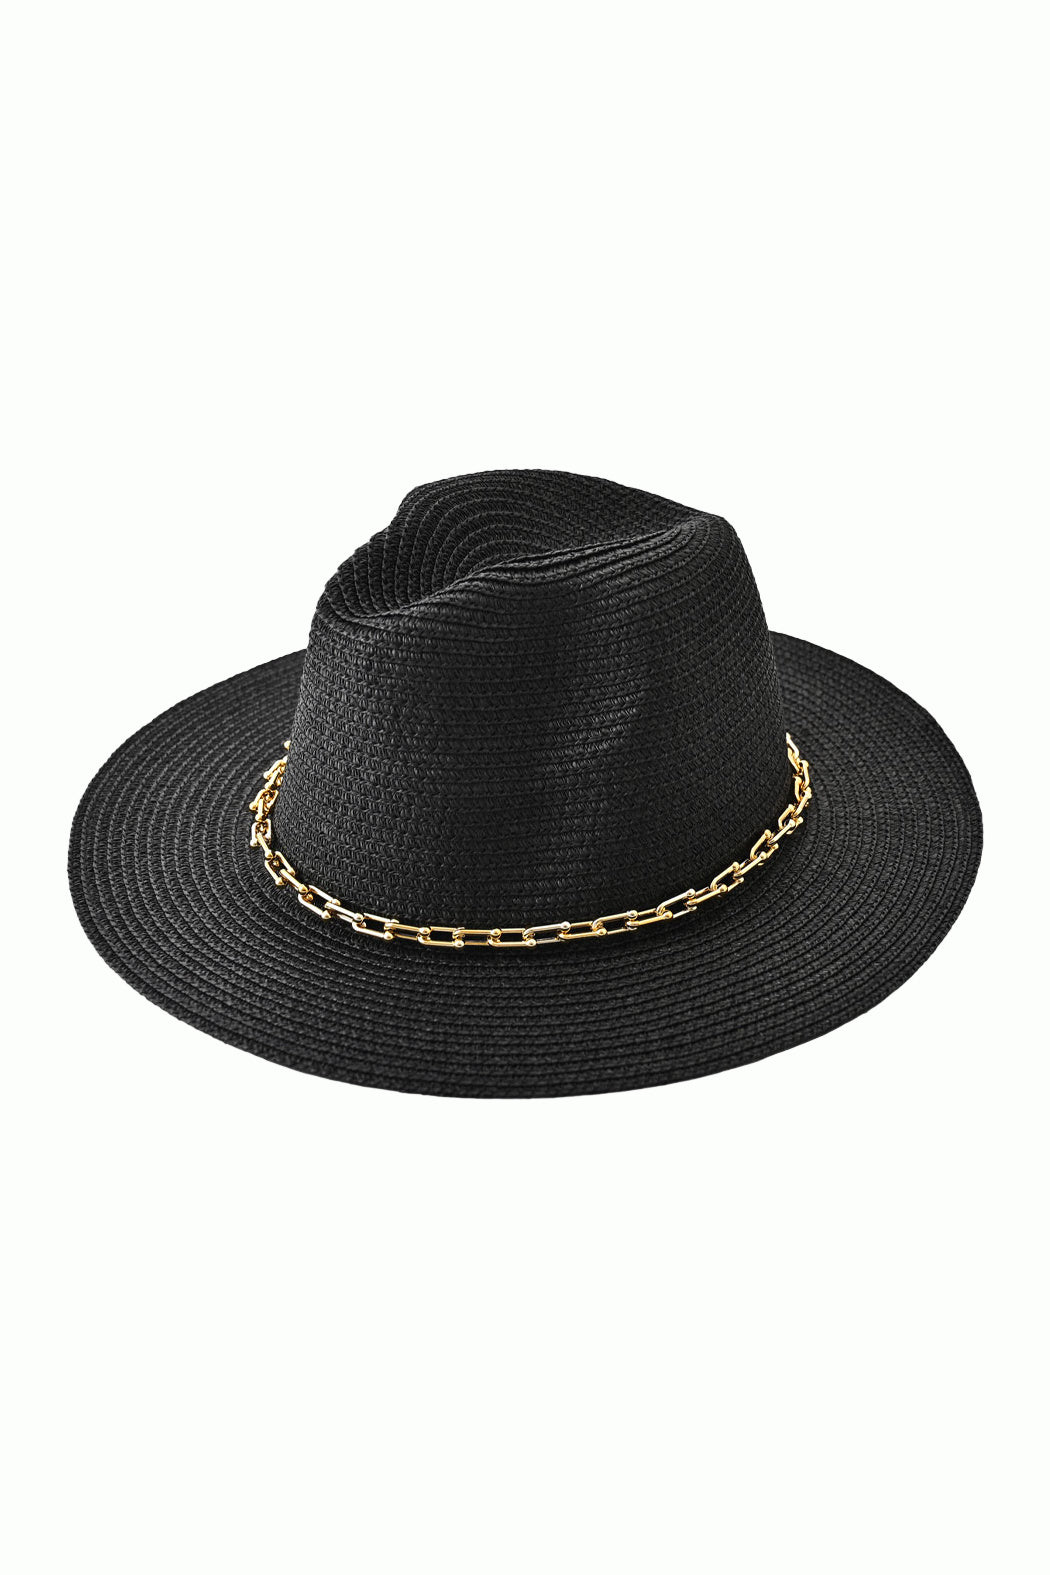 Chained Straw Panama Hat